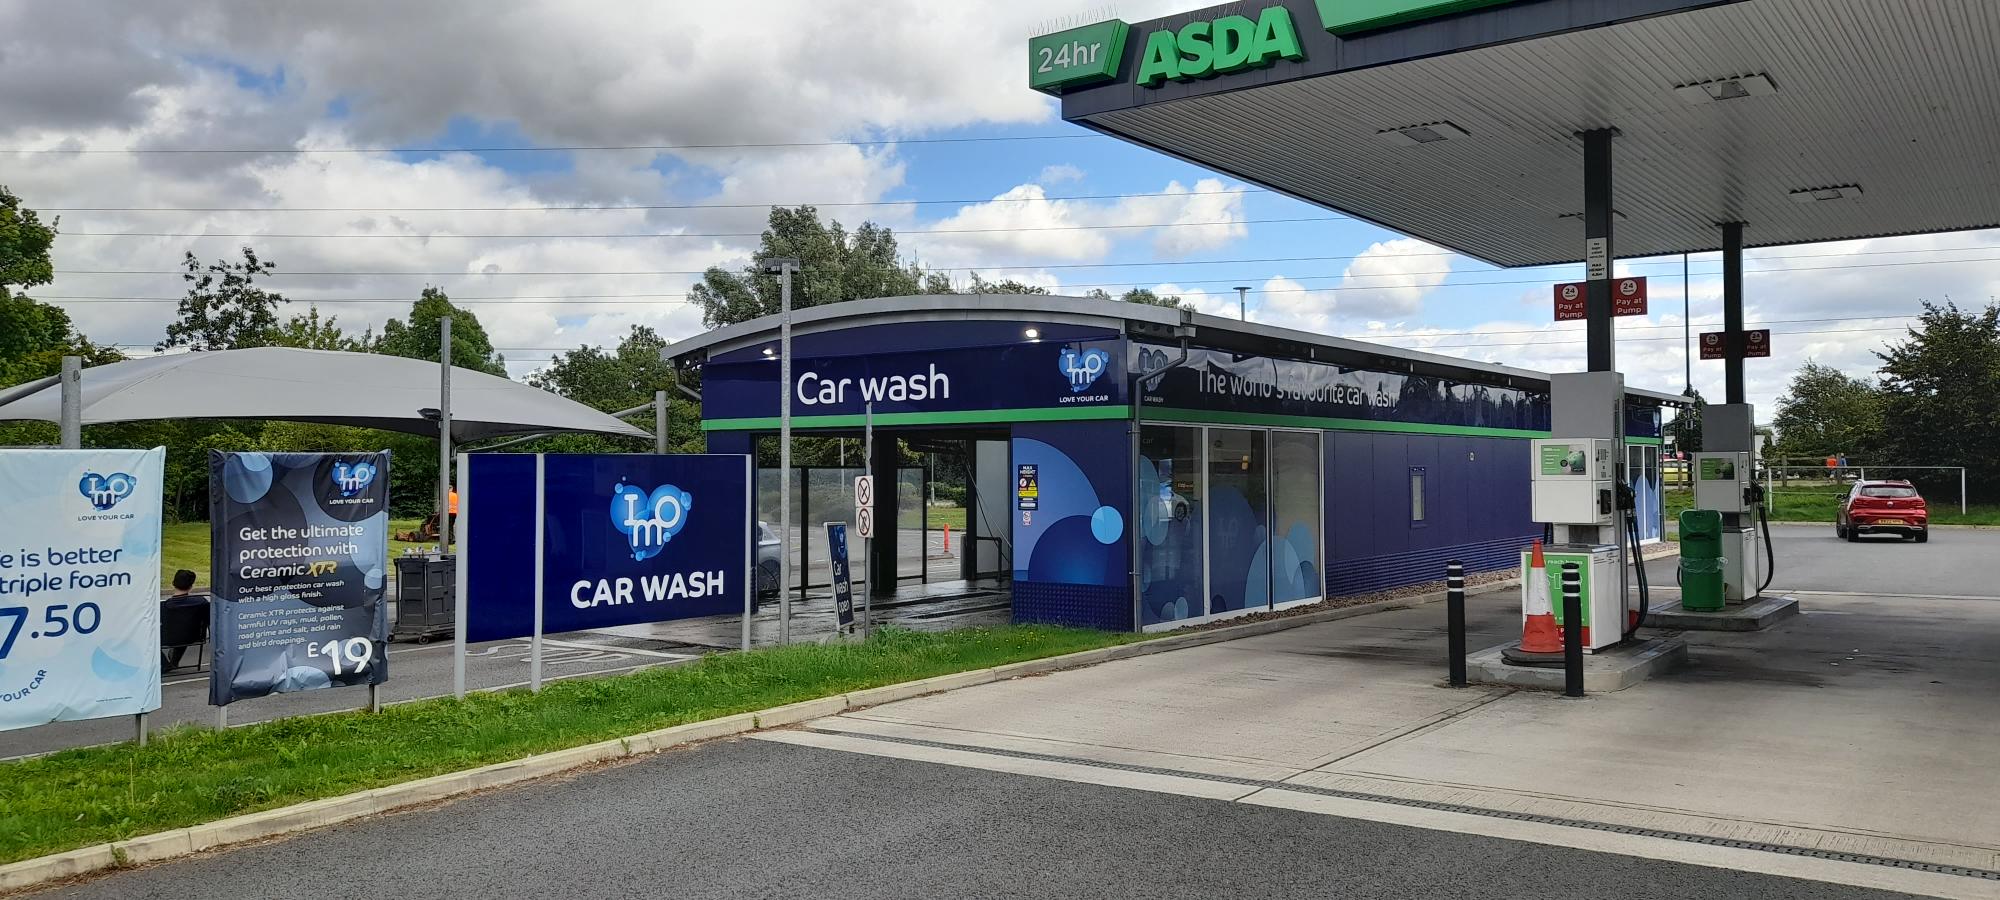 IMO Car Wash Coventry (ASDA)